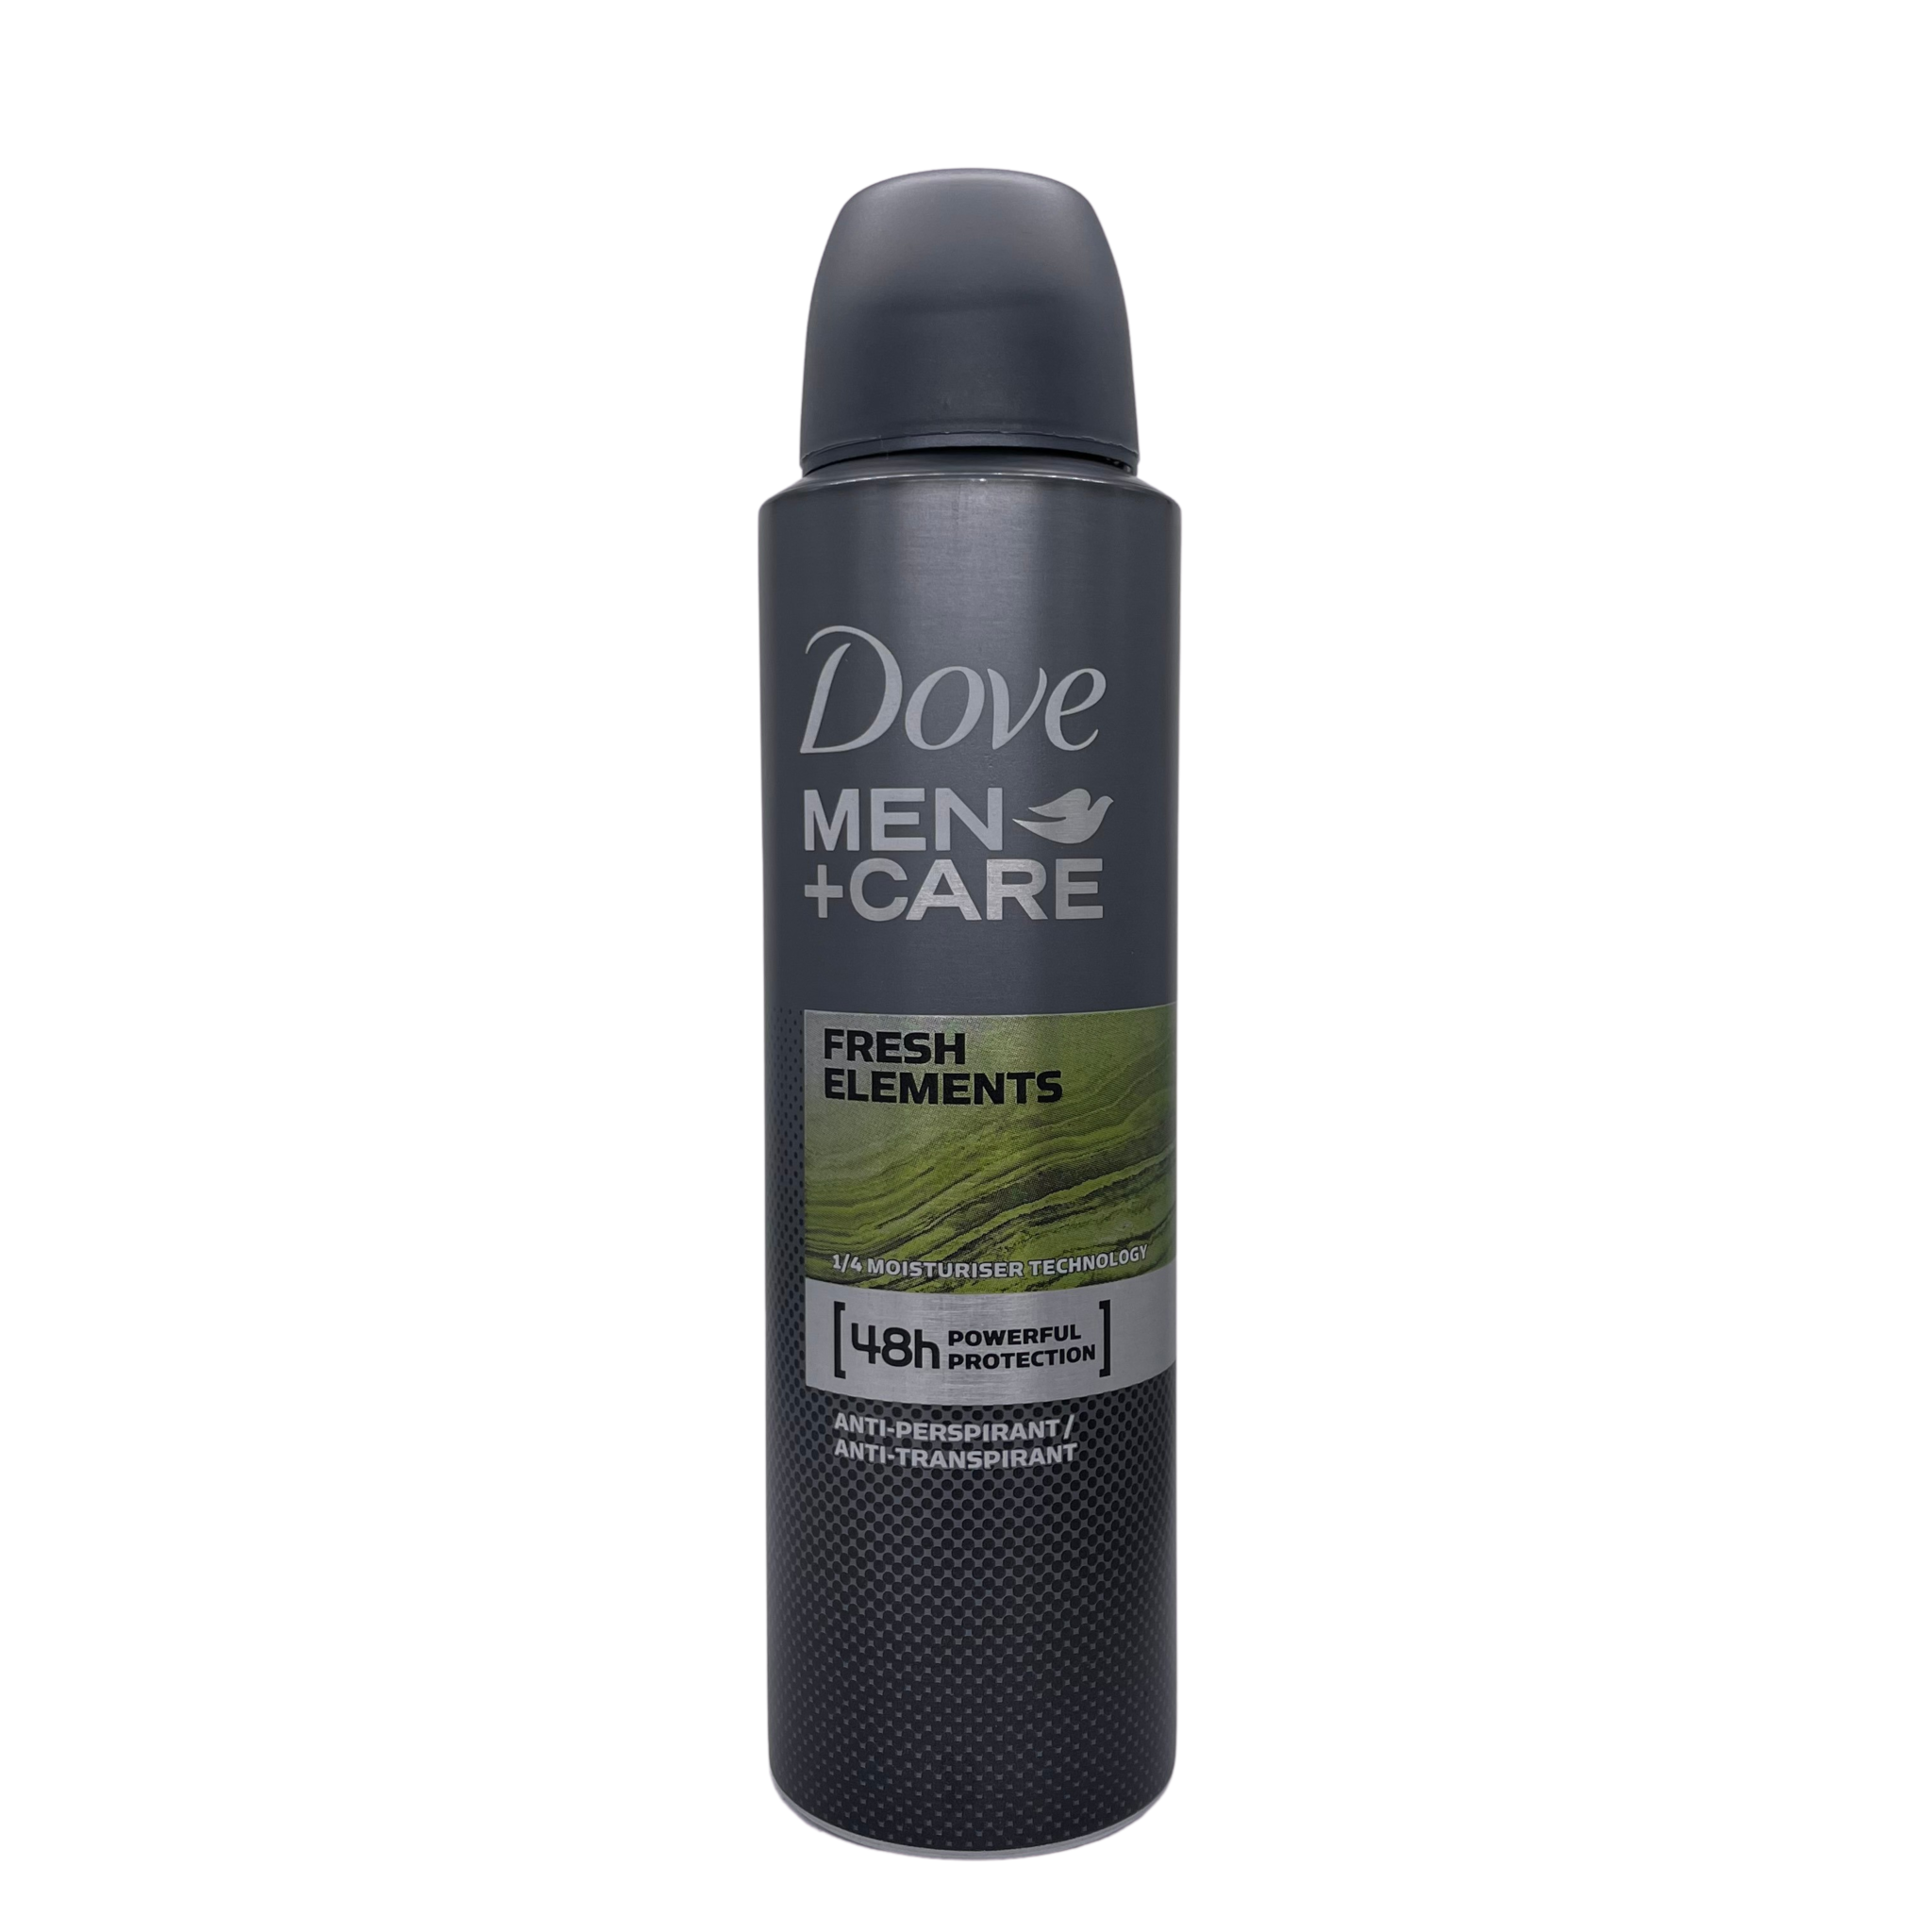 Dove Men+Care Fresh Elements deodorant spray 150ml